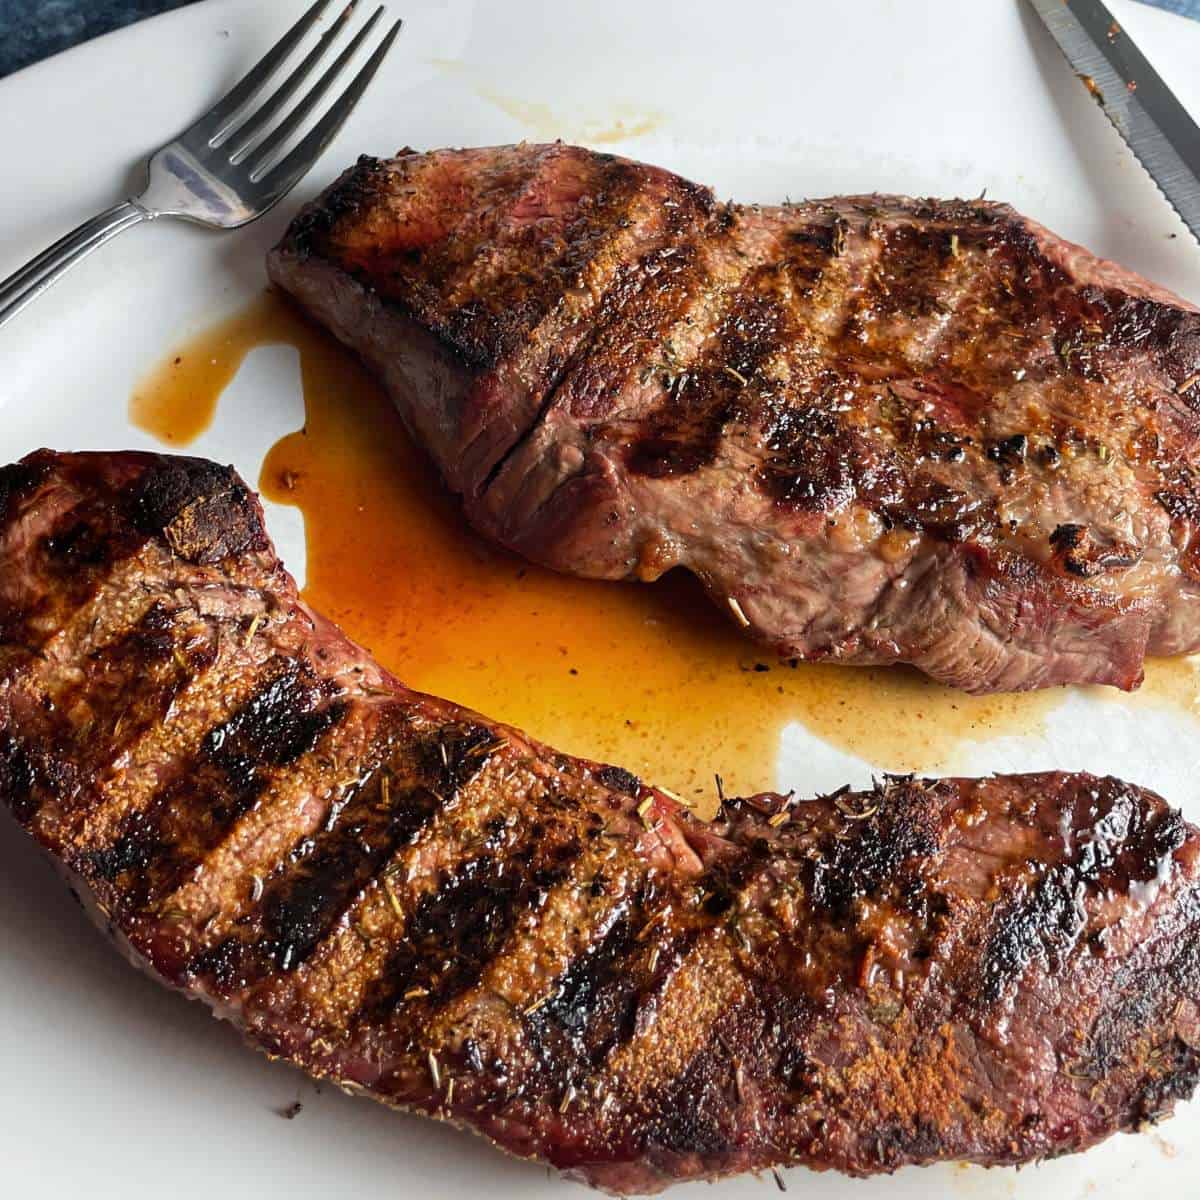 https://cookingchatfood.com/wp-content/uploads/2021/09/grilled-sirloin-steak-1200.jpg